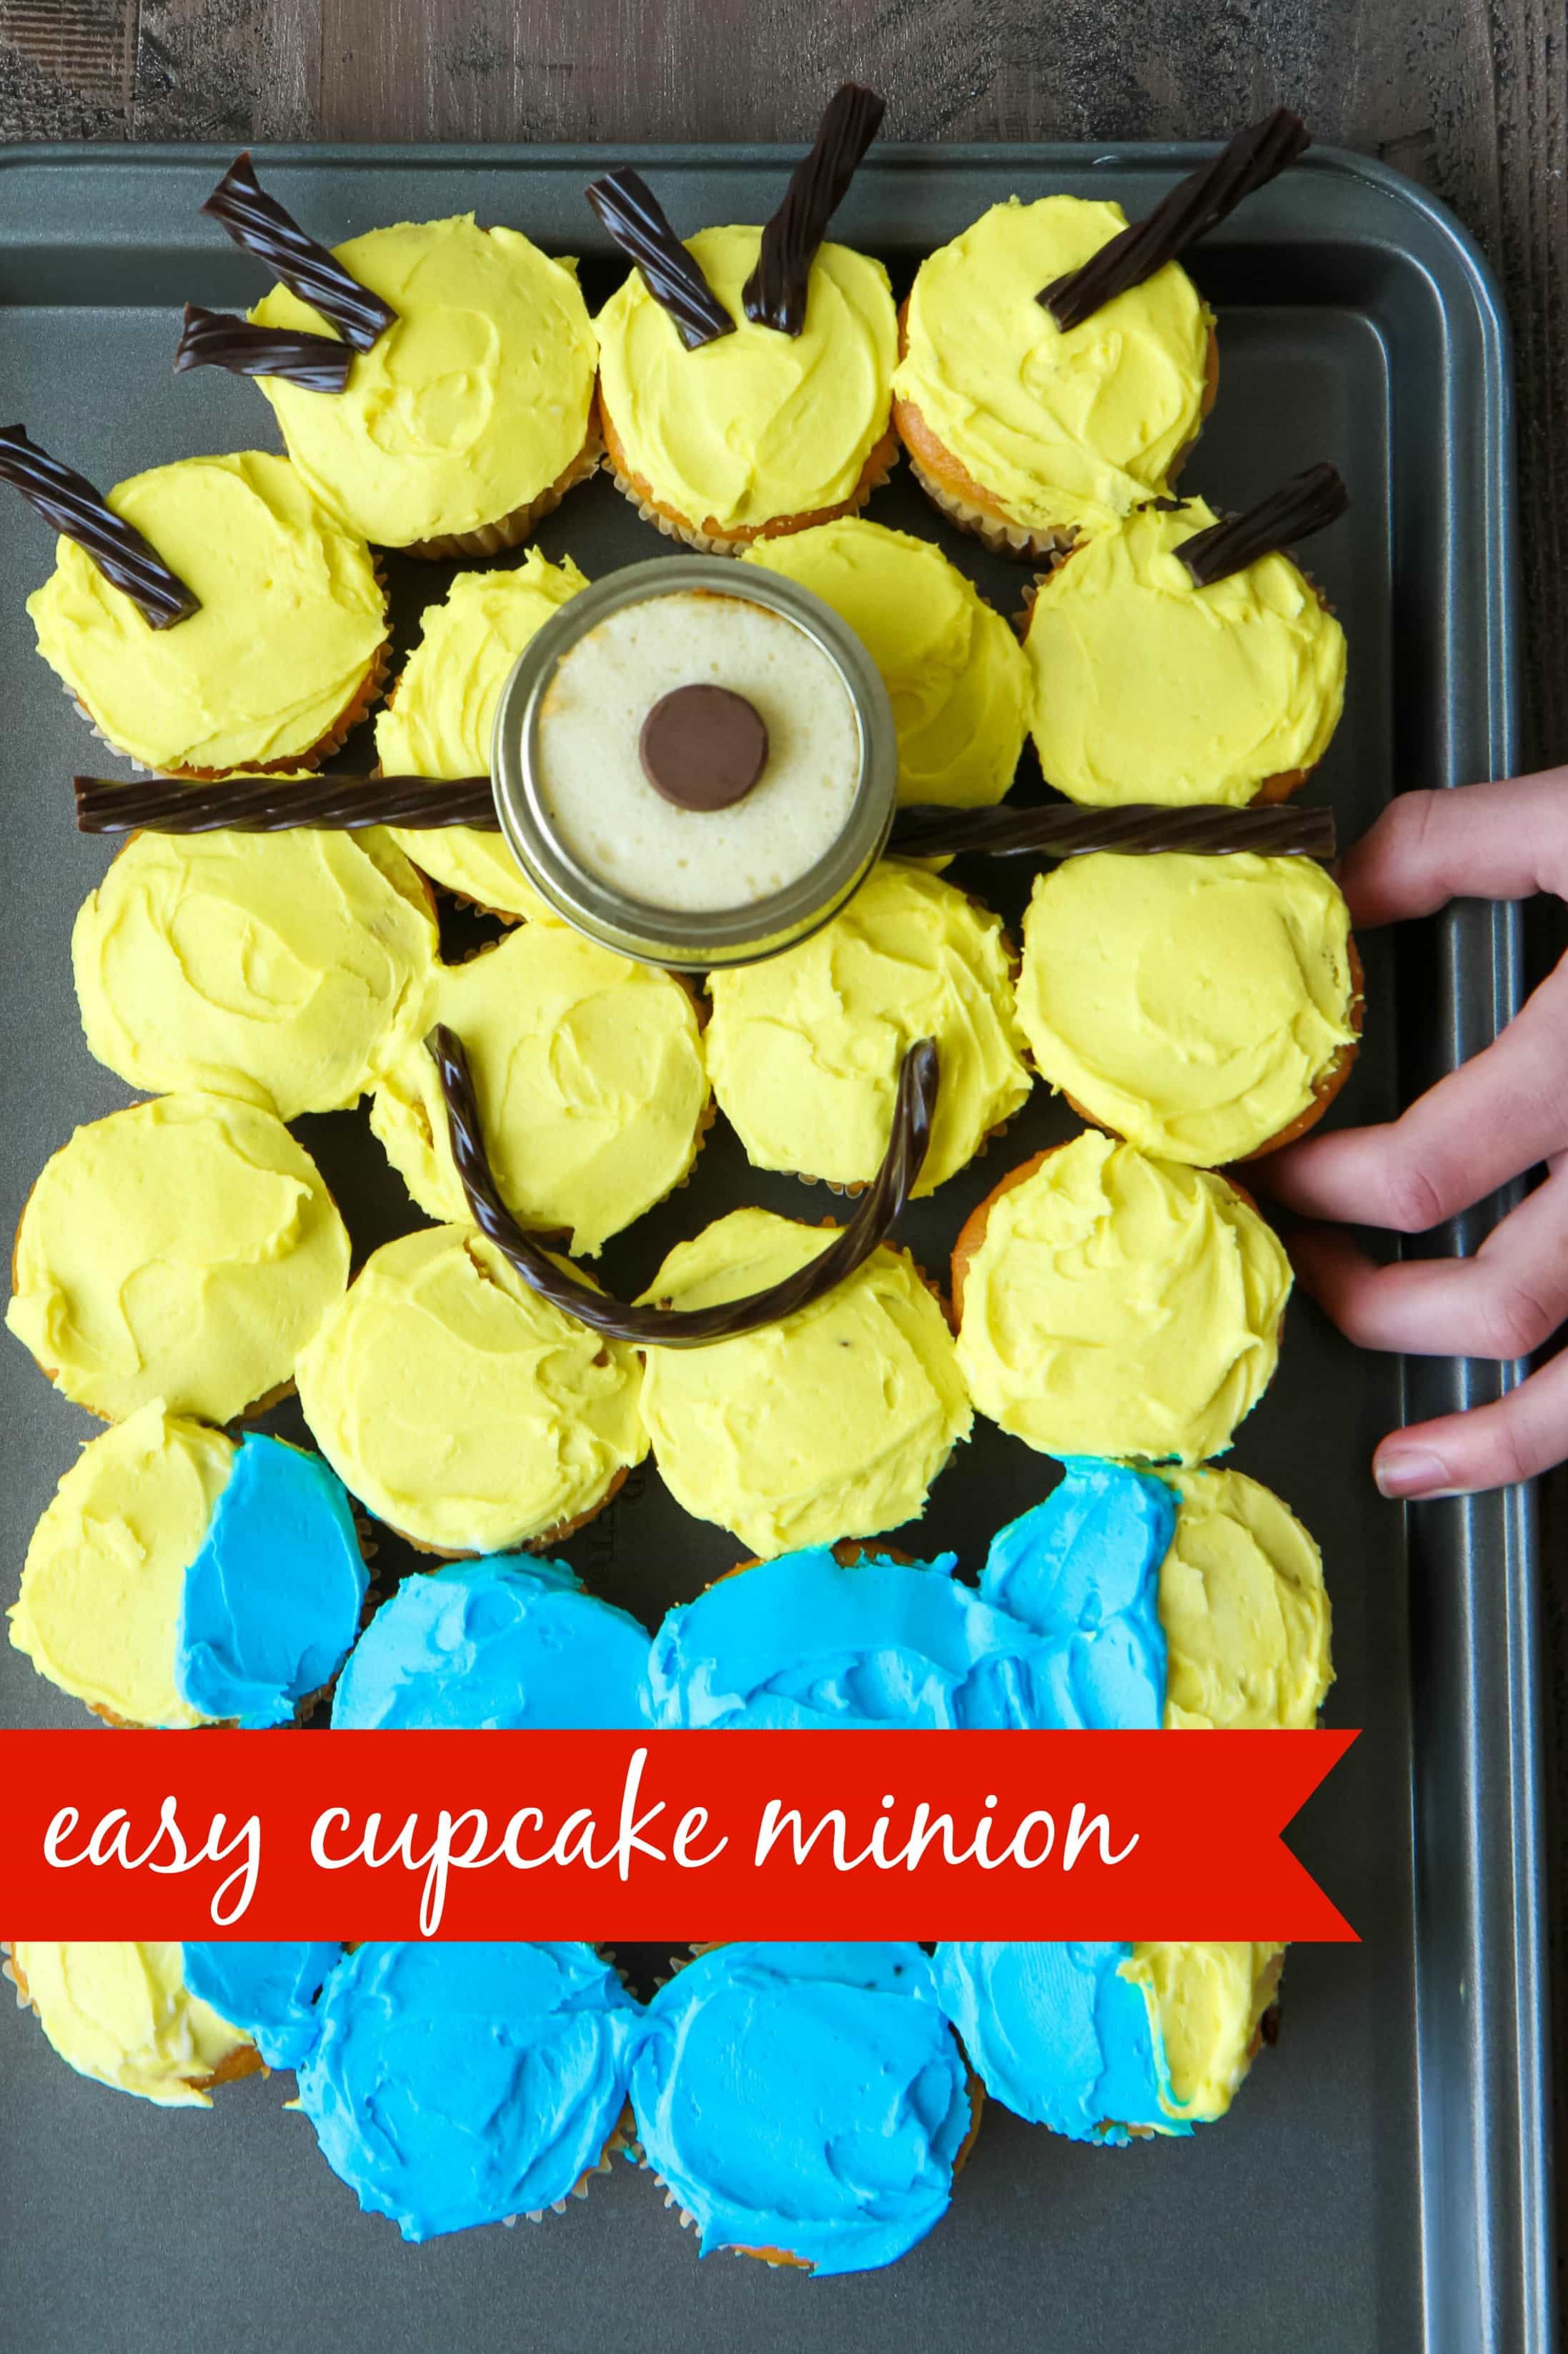 MINIONS Backyard Bash & Easy Cupcake Minion Tutorial